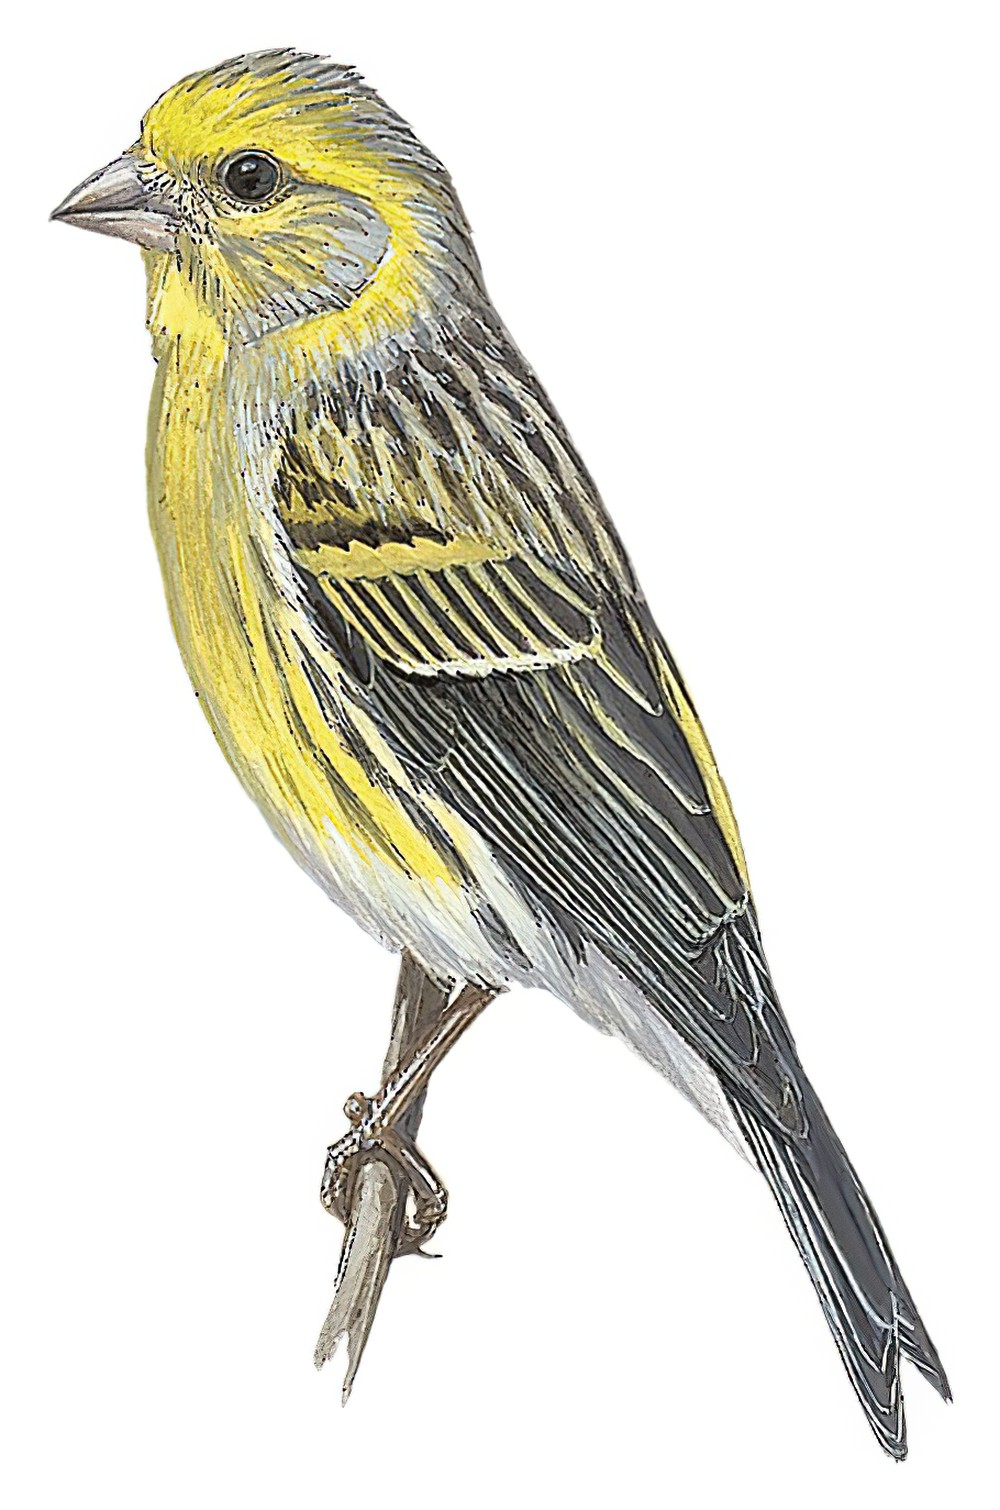 Island Canary / Serinus canaria